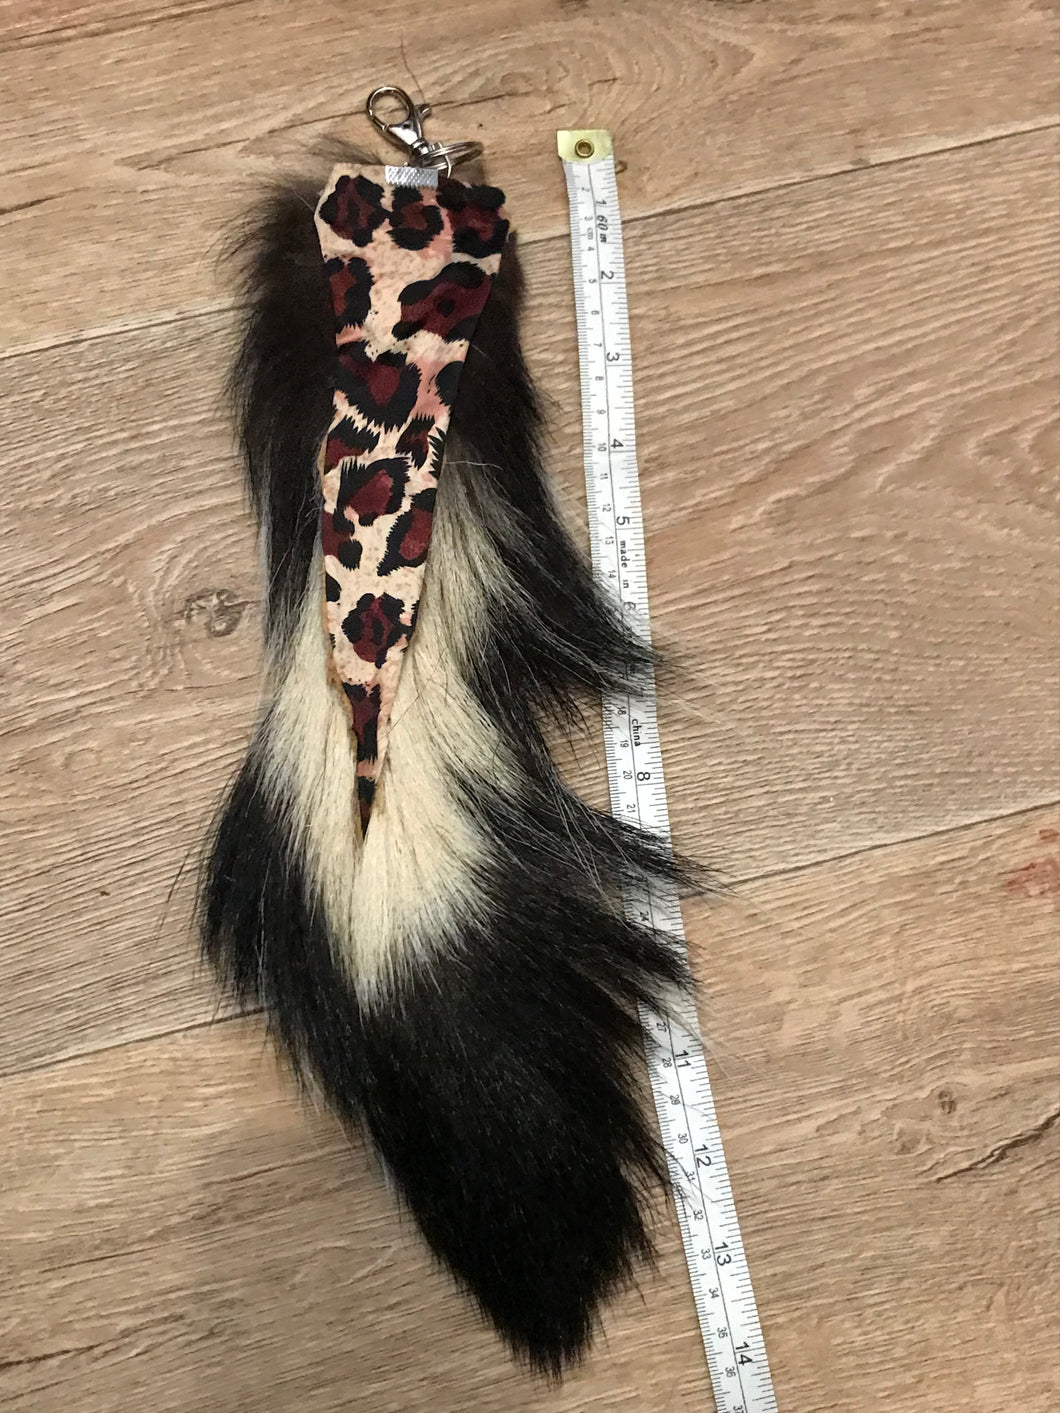 Skunk tail